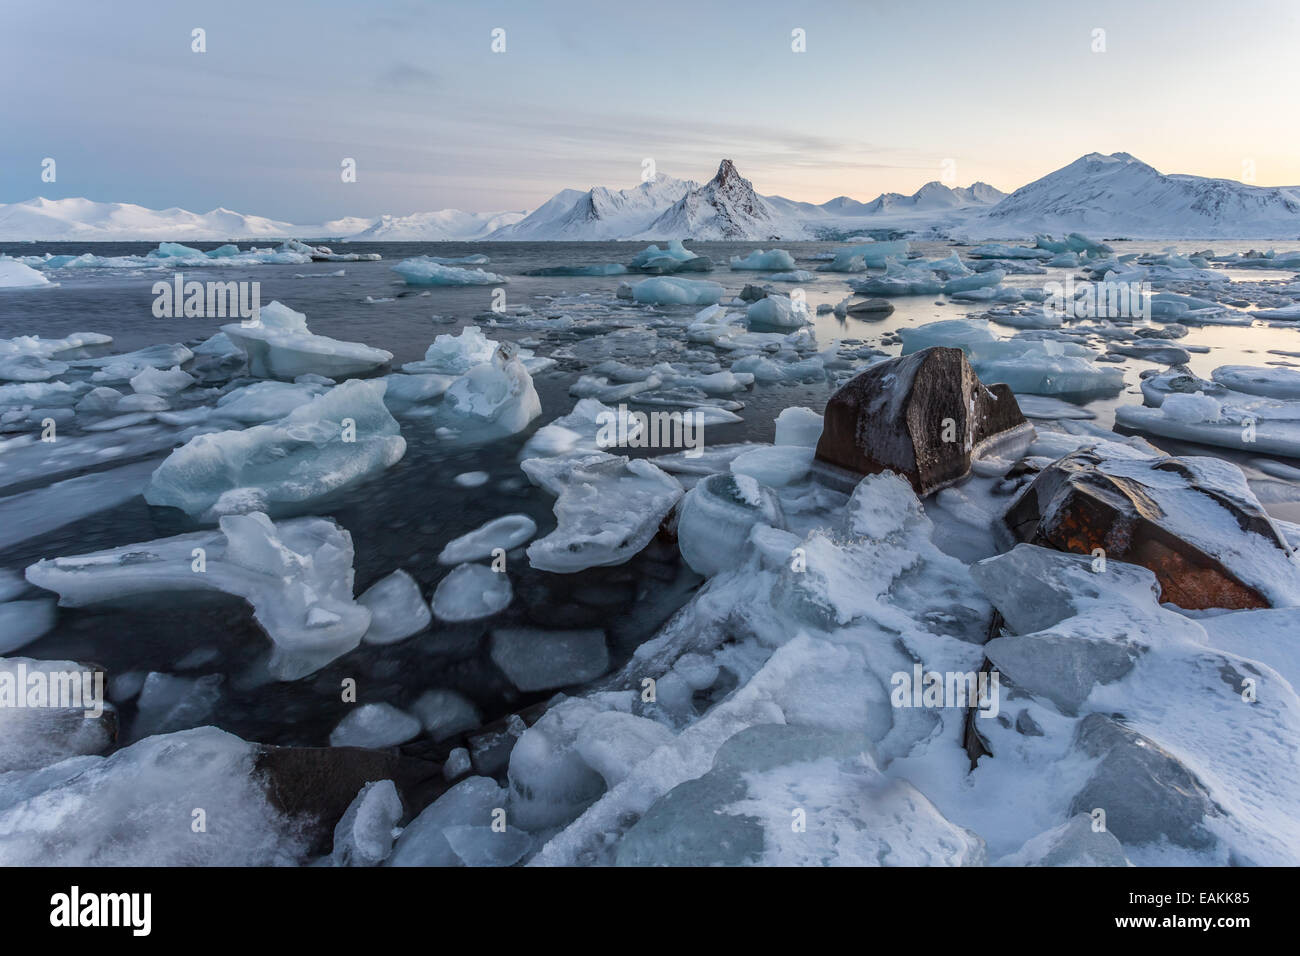 Arktische Landschaft - Eis, Meer, Berge, Gletscher - Spitzbergen, Svalbard Stockfoto